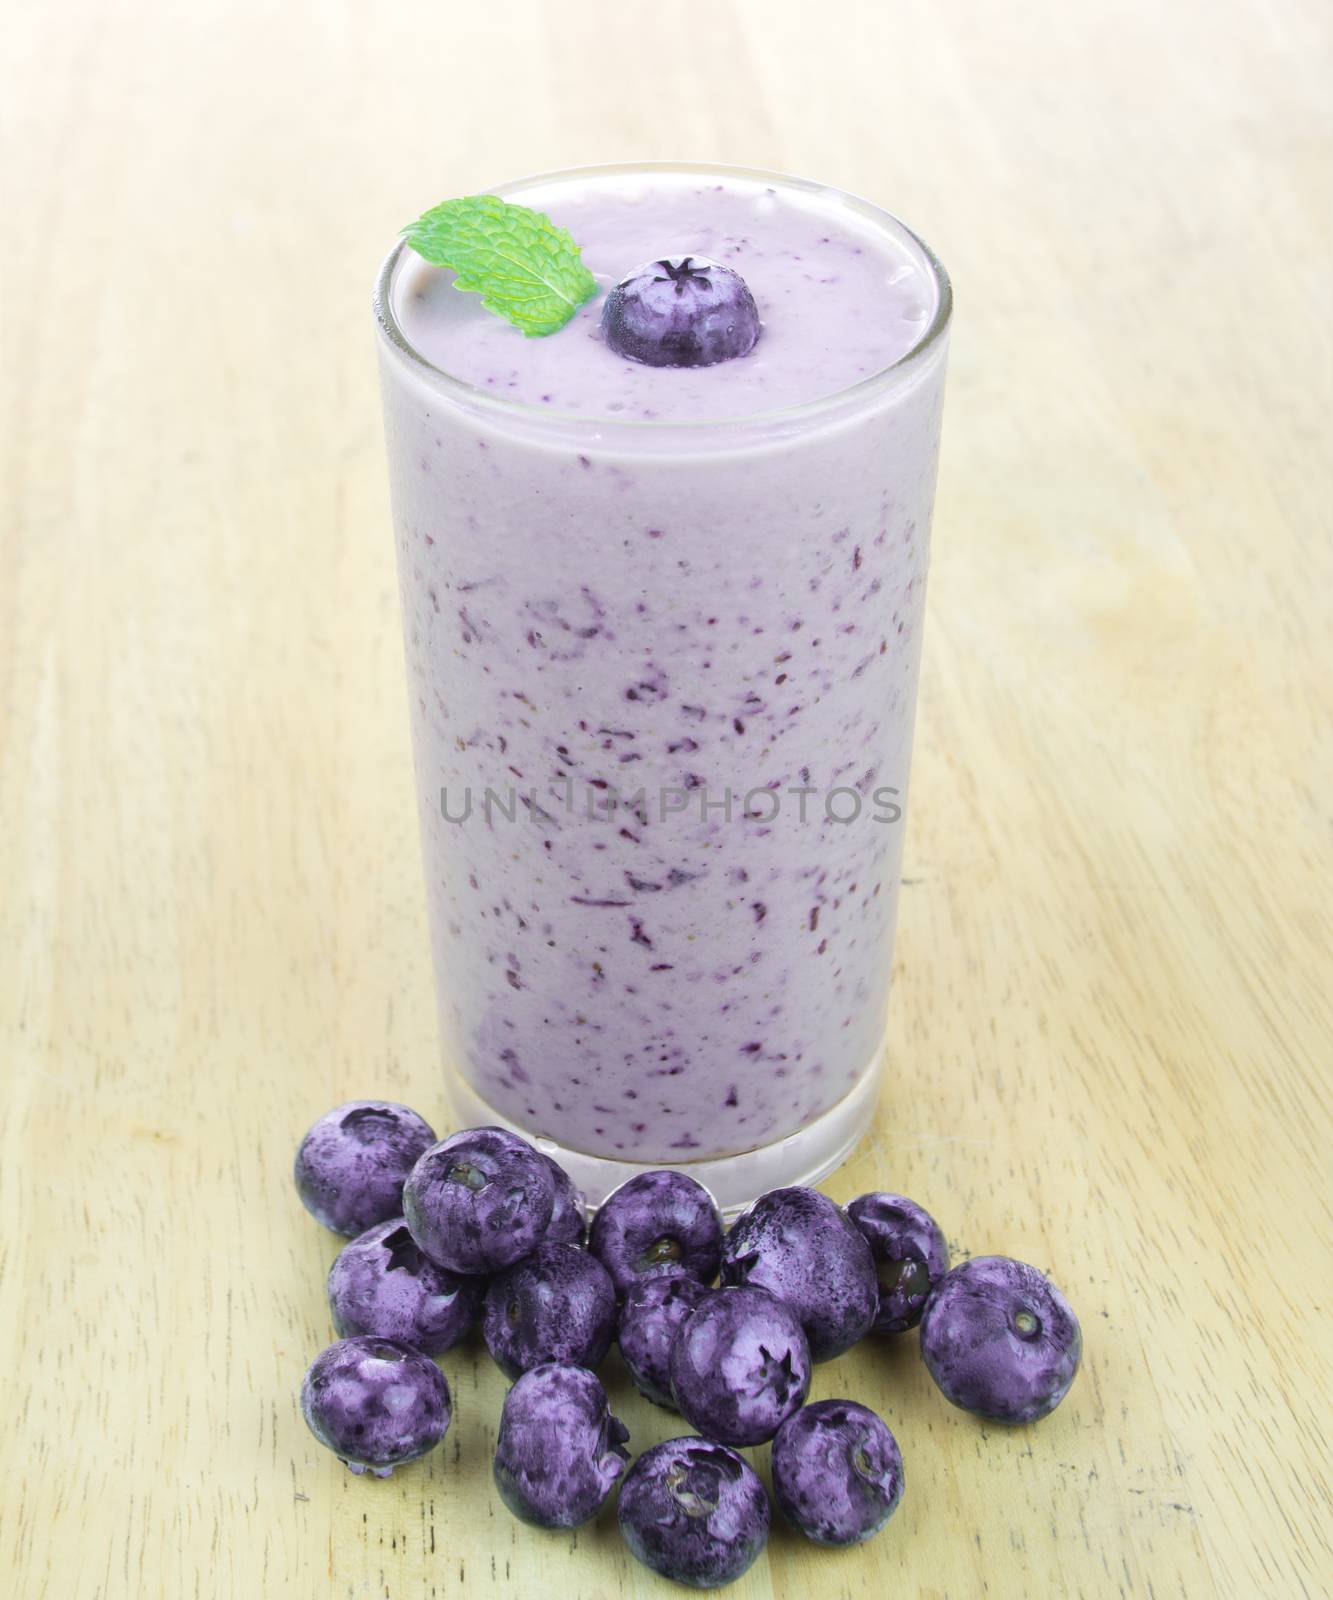 Blueberry smoothie by wyoosumran